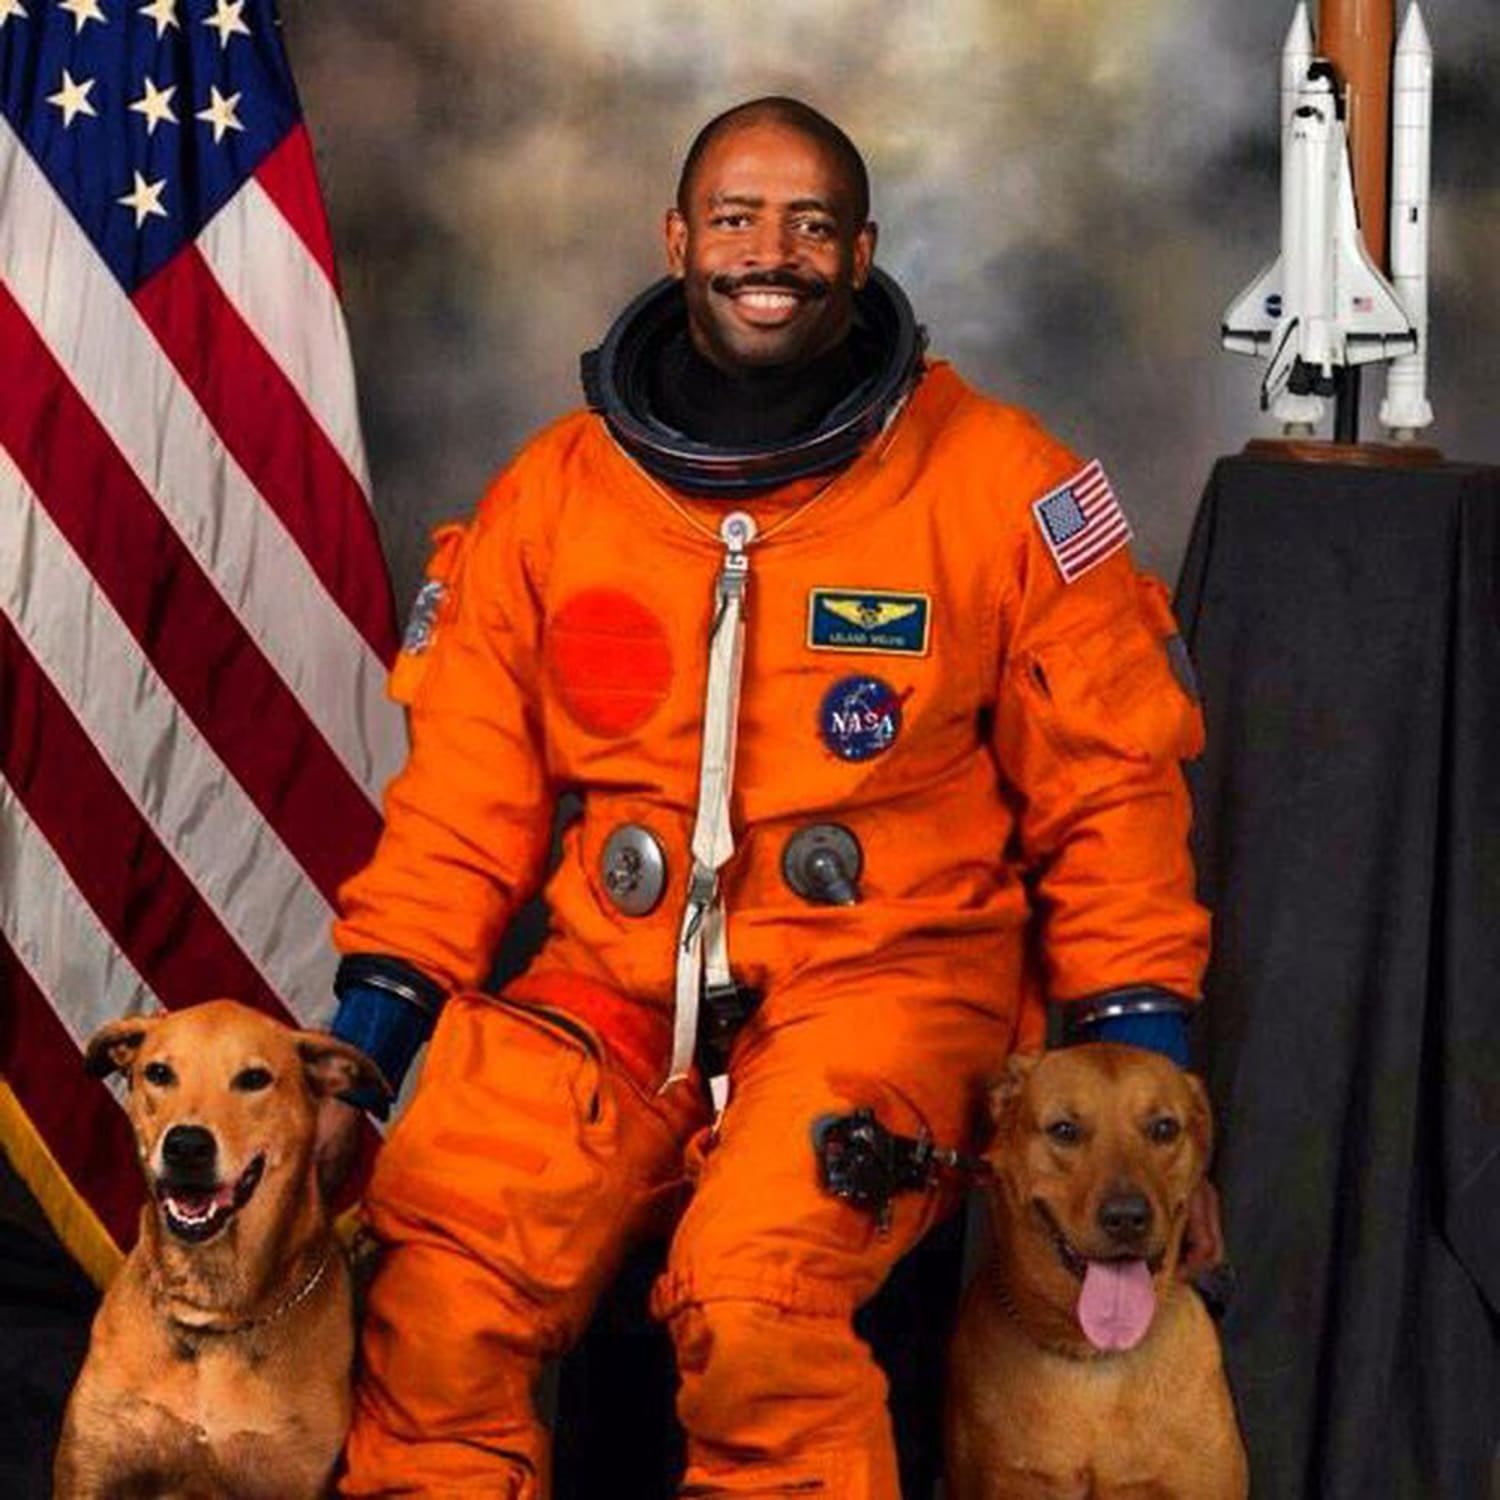 Astronaut Leland Melvin's NASA photo includes 2 rescue dogs